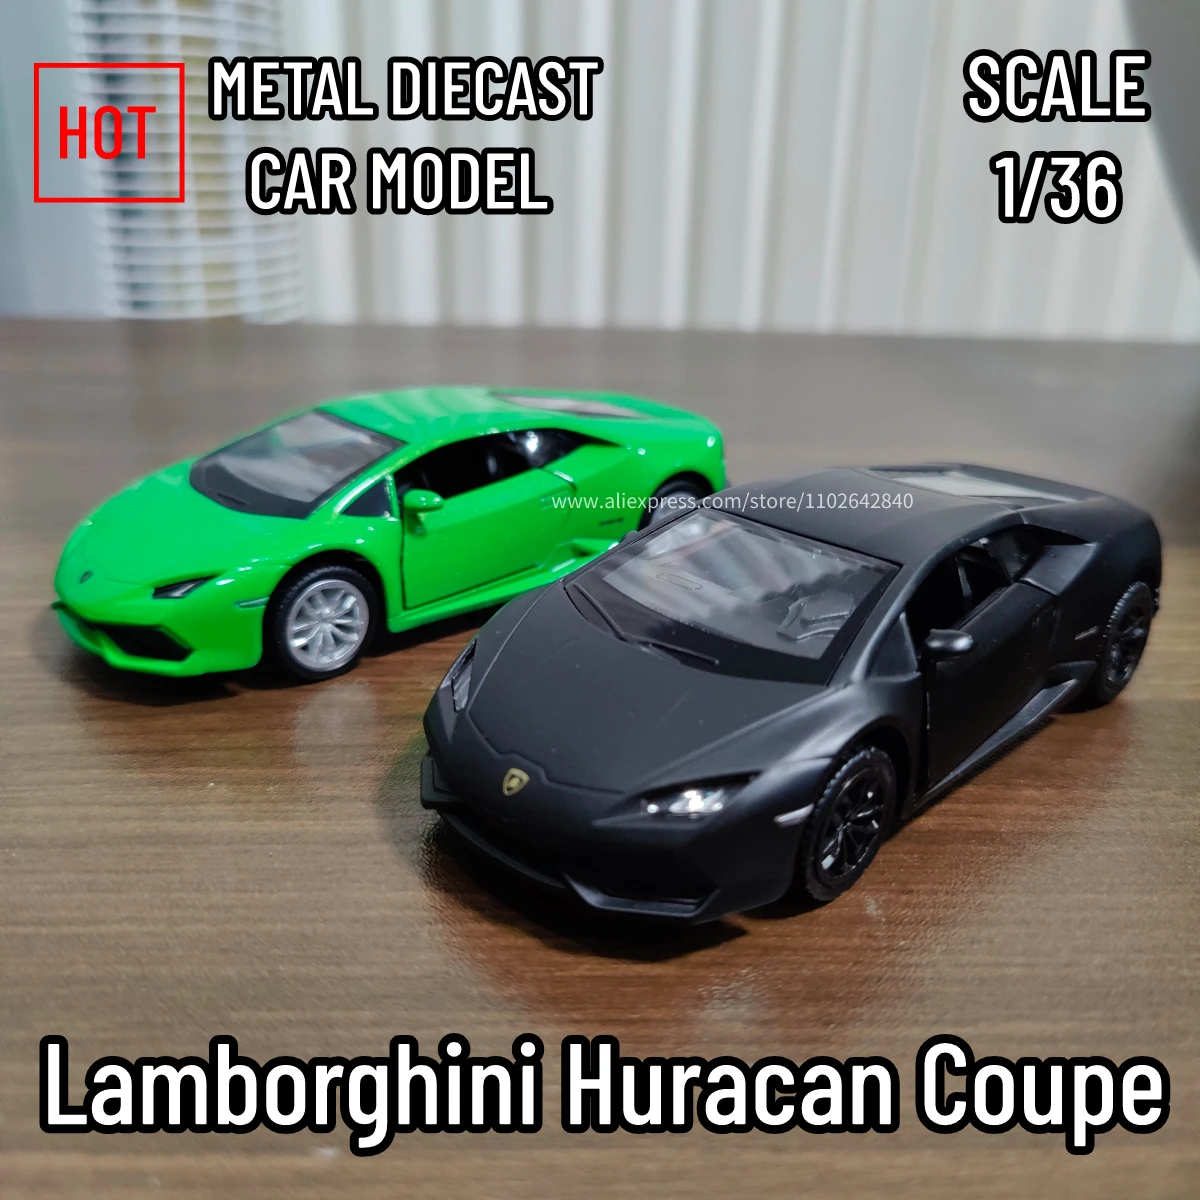 

1/36 Scale Lamborghini Huracan Coupe Car Model Replica Diecast Collection Vehicle Interior Decor Ornament Xmas Gift Kid Boy Toy